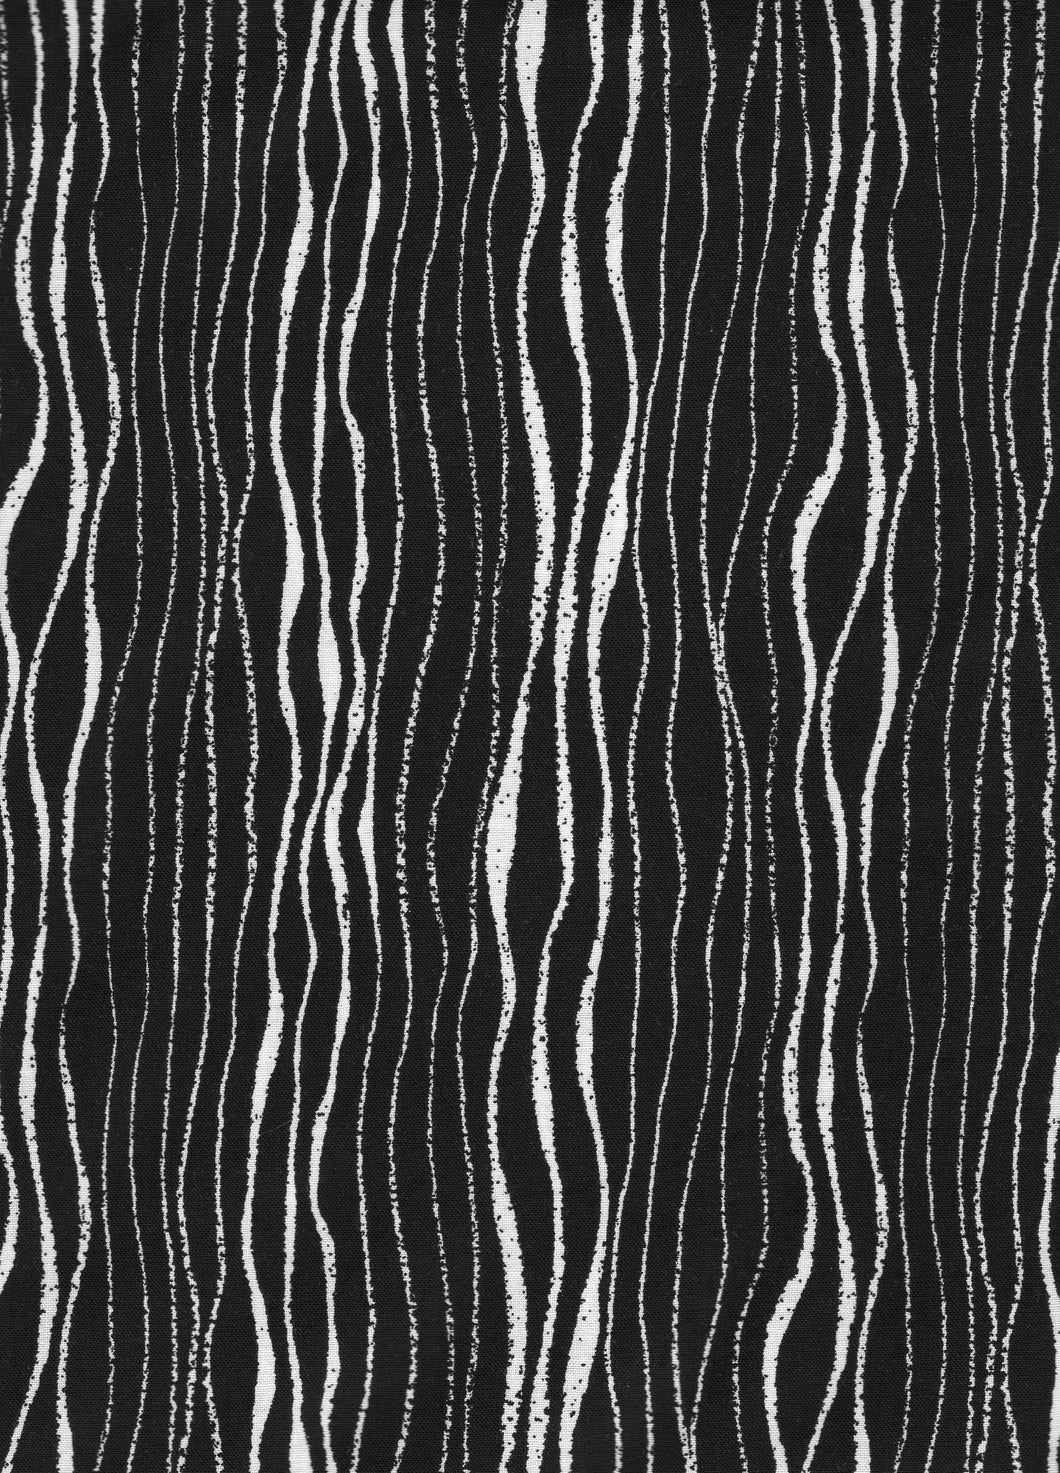 White Wavy Stripes / Black bla431